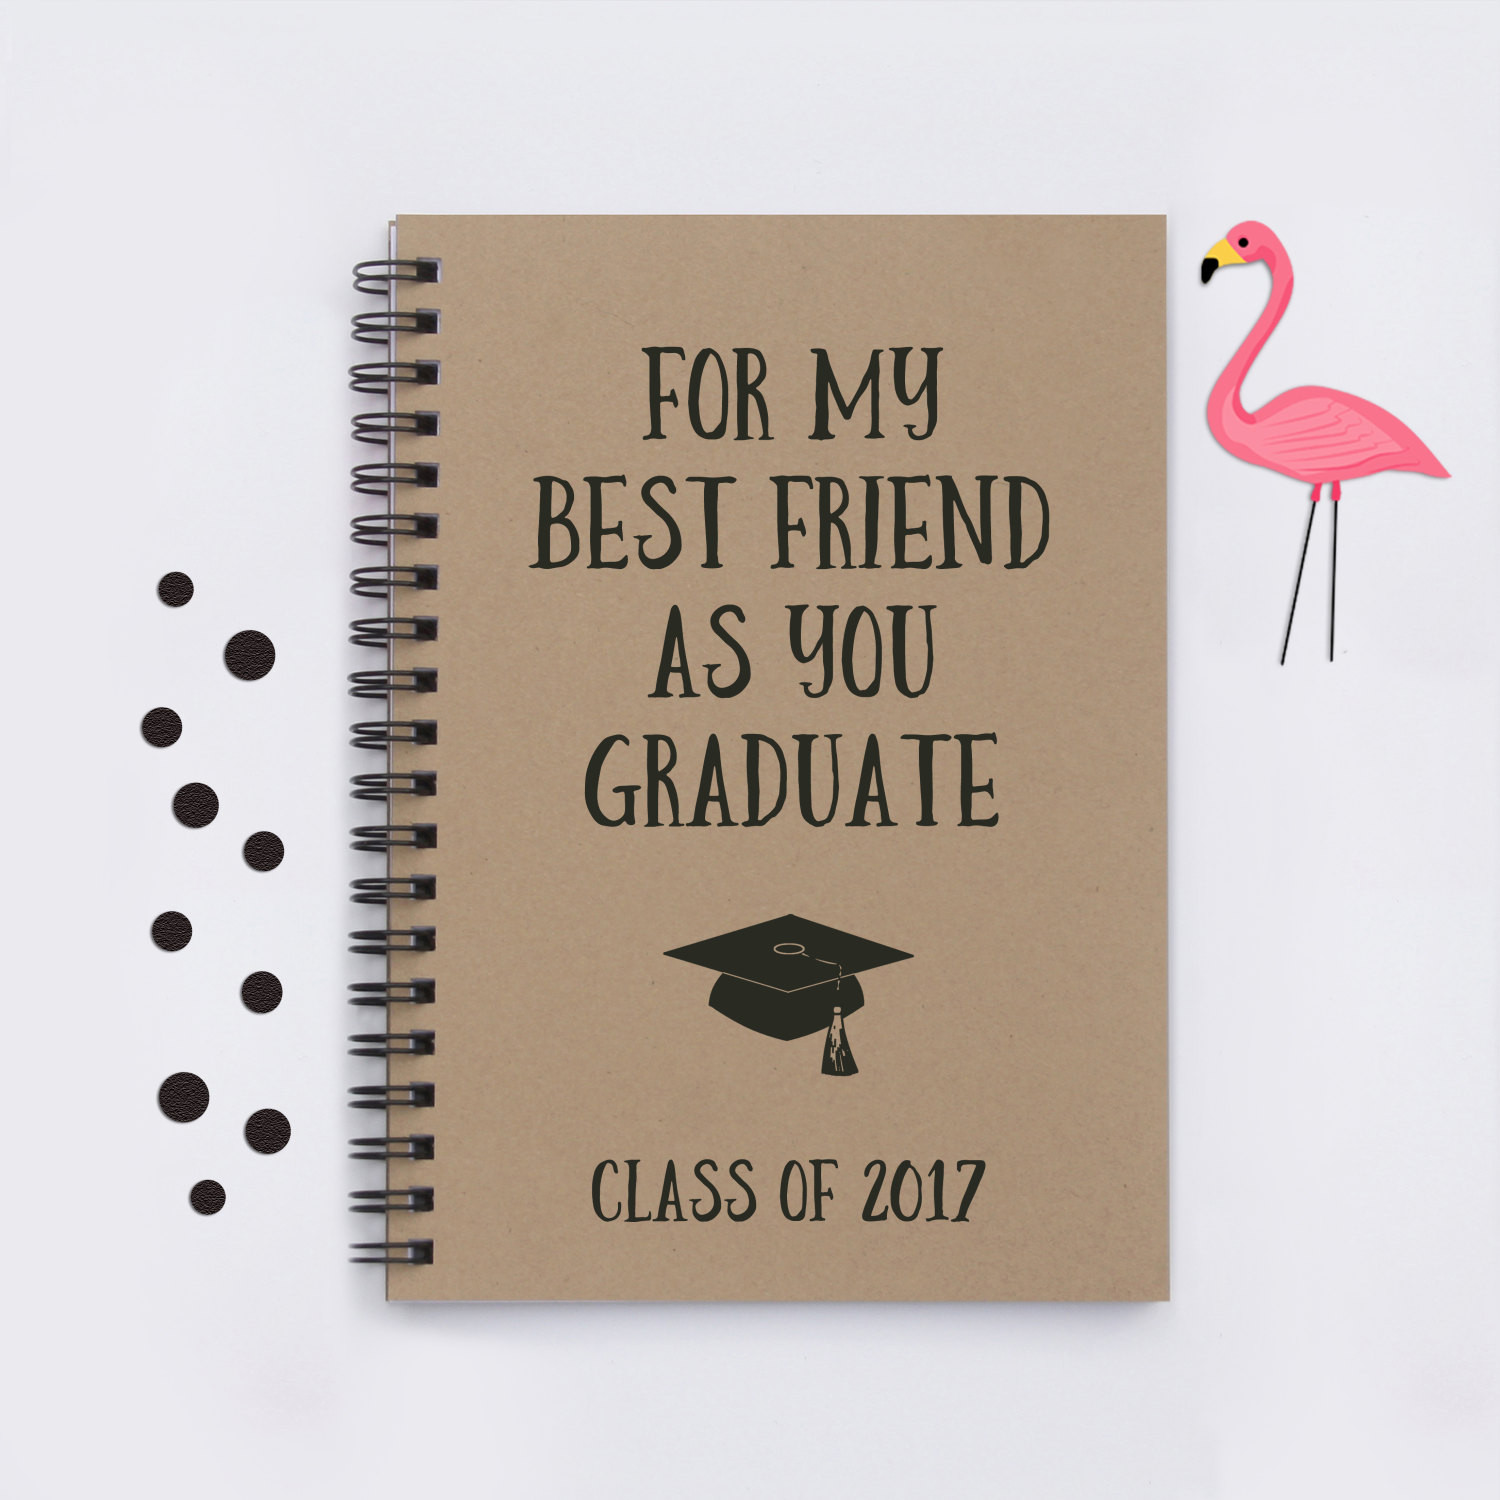 Graduation Gift Ideas For Your Boyfriend
 Best friend graduation For my Best Friend as you Graduate